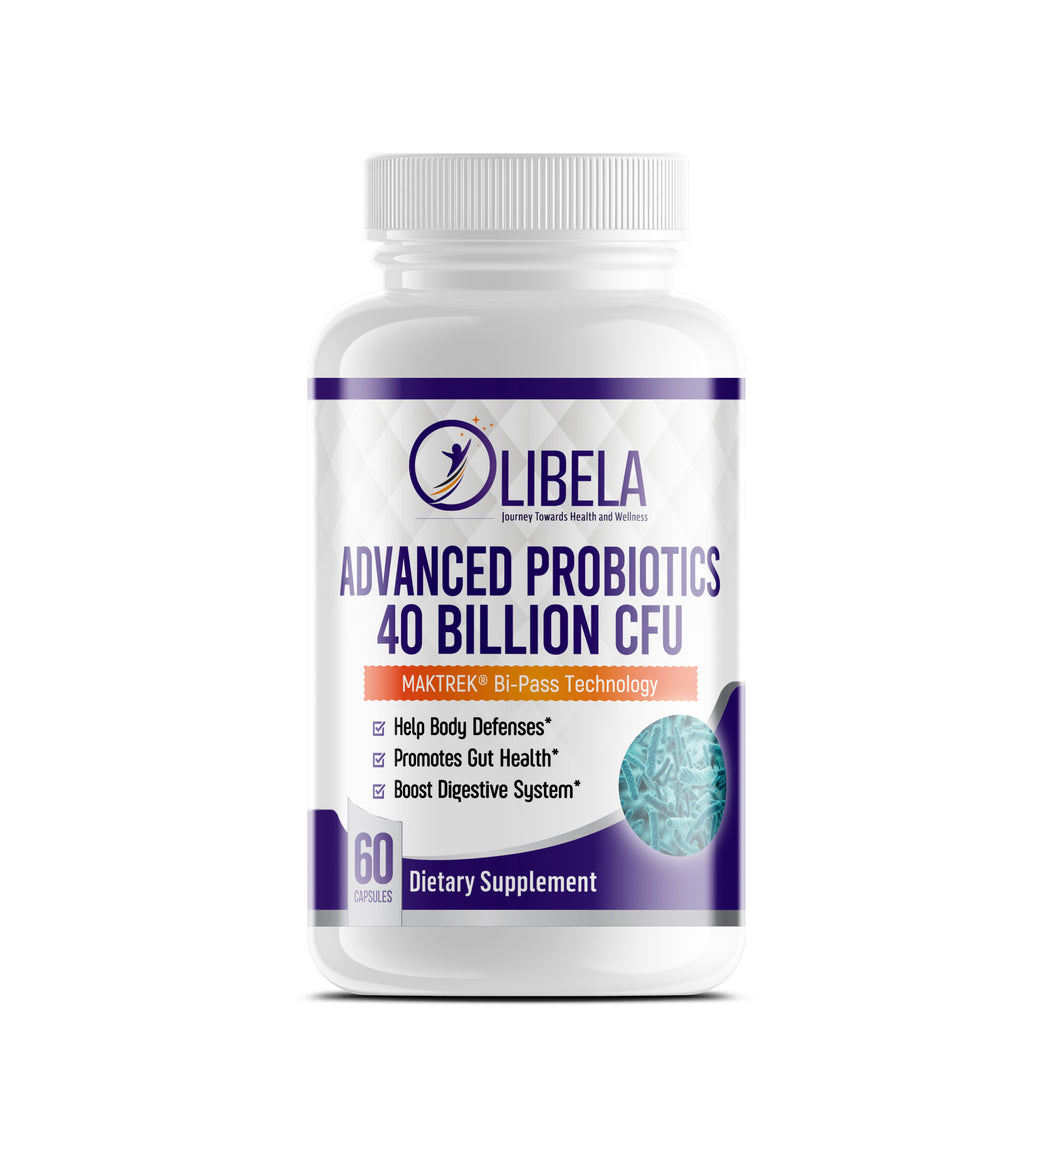 Probiotic 40 Billion CFU - Prebiotics - Probiotics For Women & Men Complete Shelf Stable Probiotic Supplement with Prebiotics & Digestive Enzymes, MAKTREK (Bi-Pass Technology) | 60 Caps.